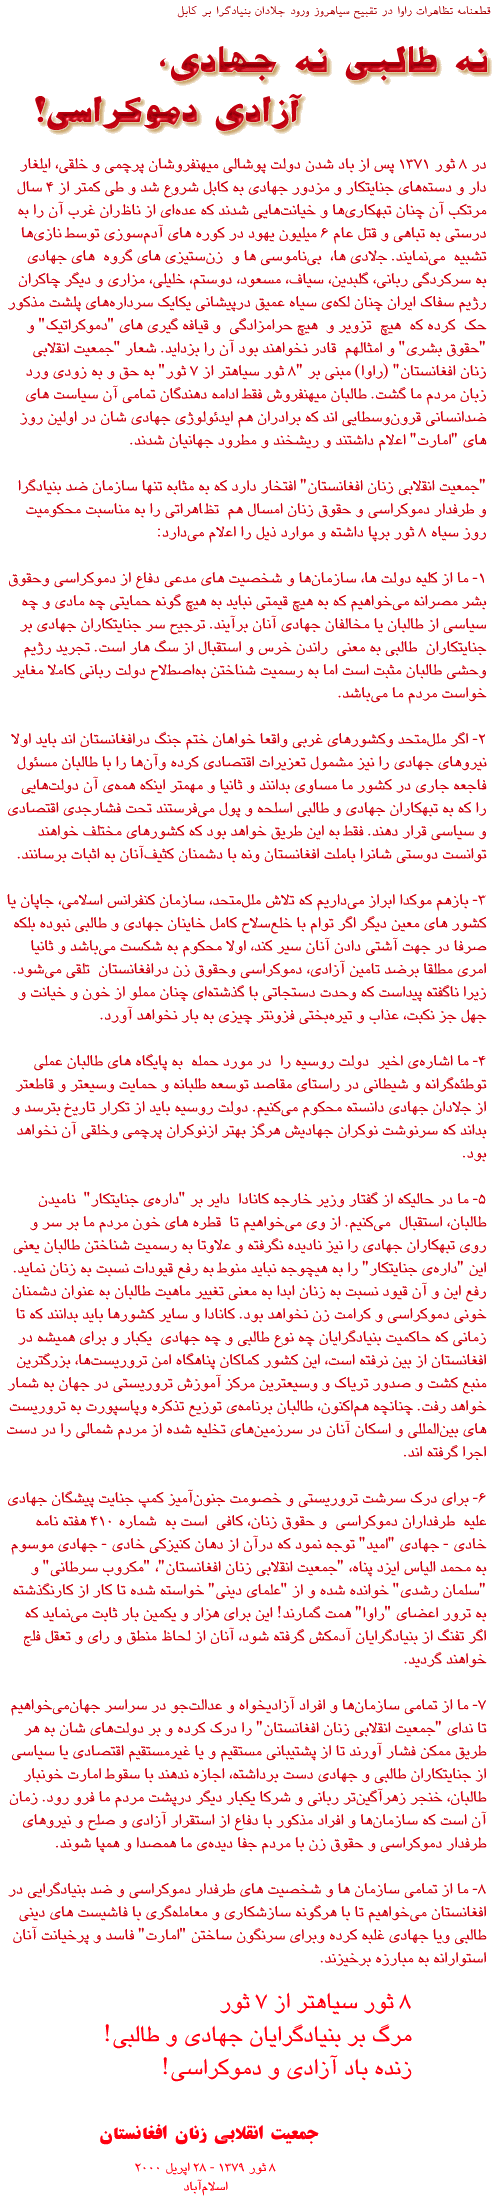 RAWA resolution on Black Day of April 28,2000 (Farsi)